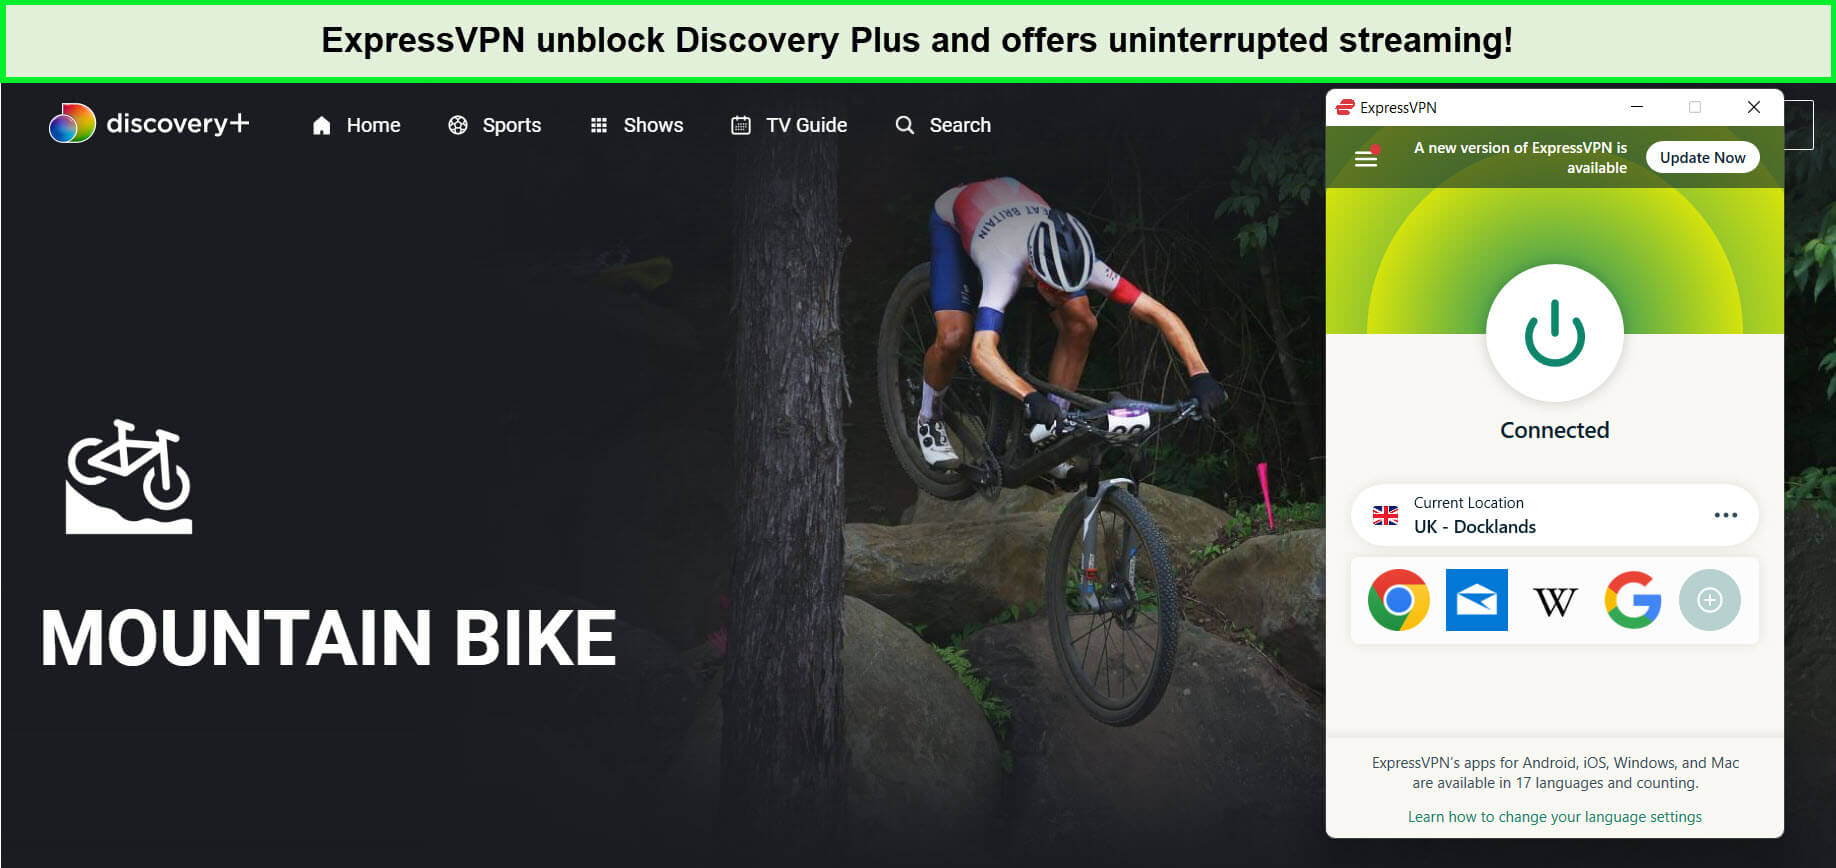 expressvpn-unblocks-uci-mountain-bike-world-series---discovery-plus